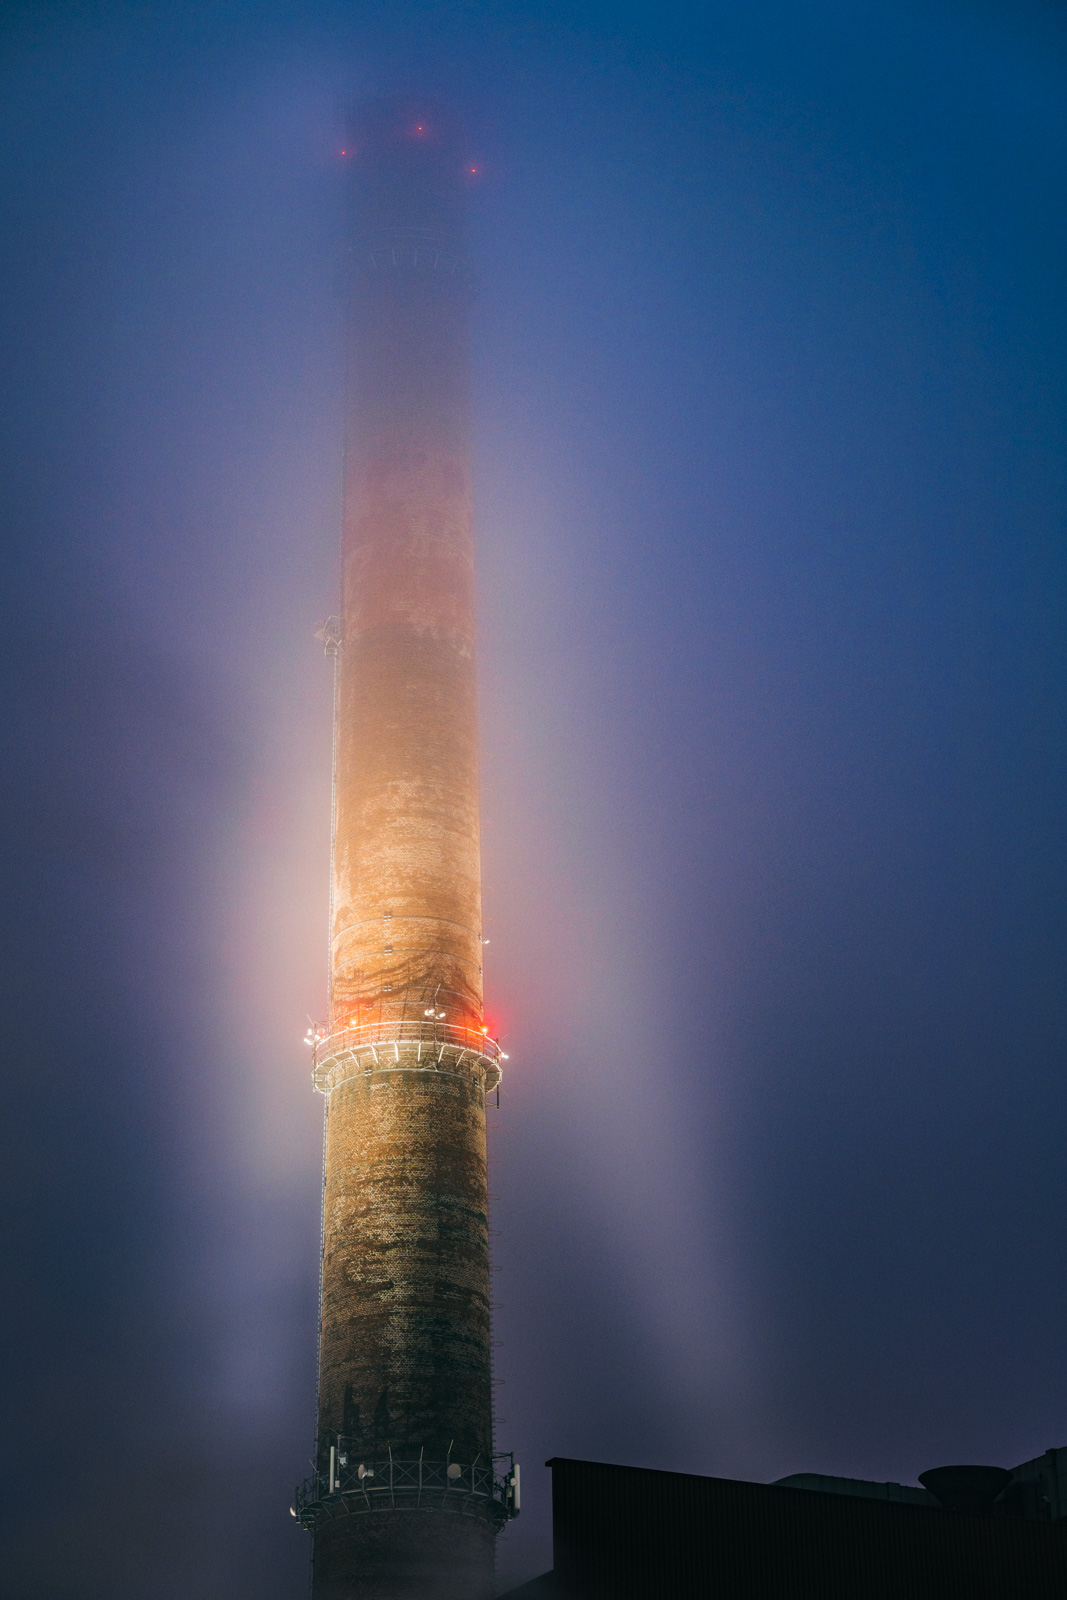 Chimney in the morning fog (Bielefeld, Germany).